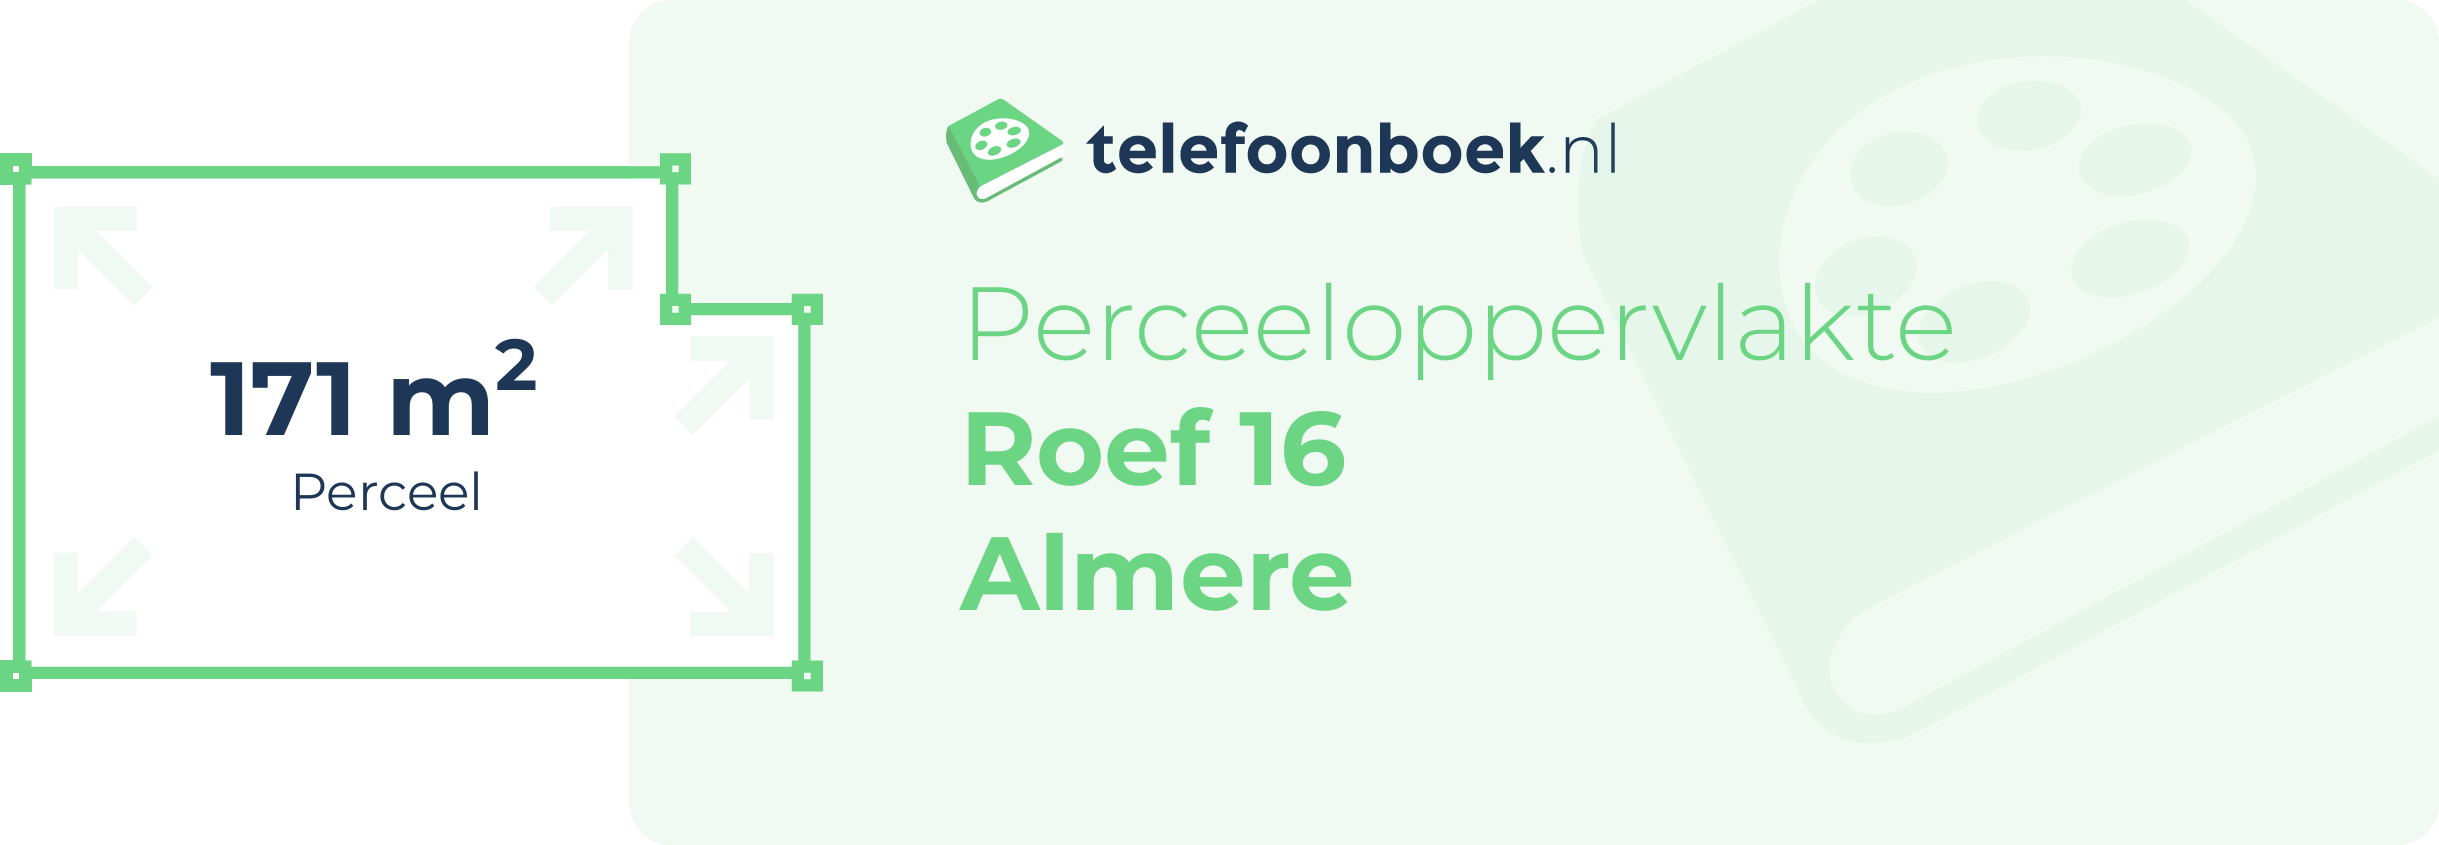 Perceeloppervlakte Roef 16 Almere